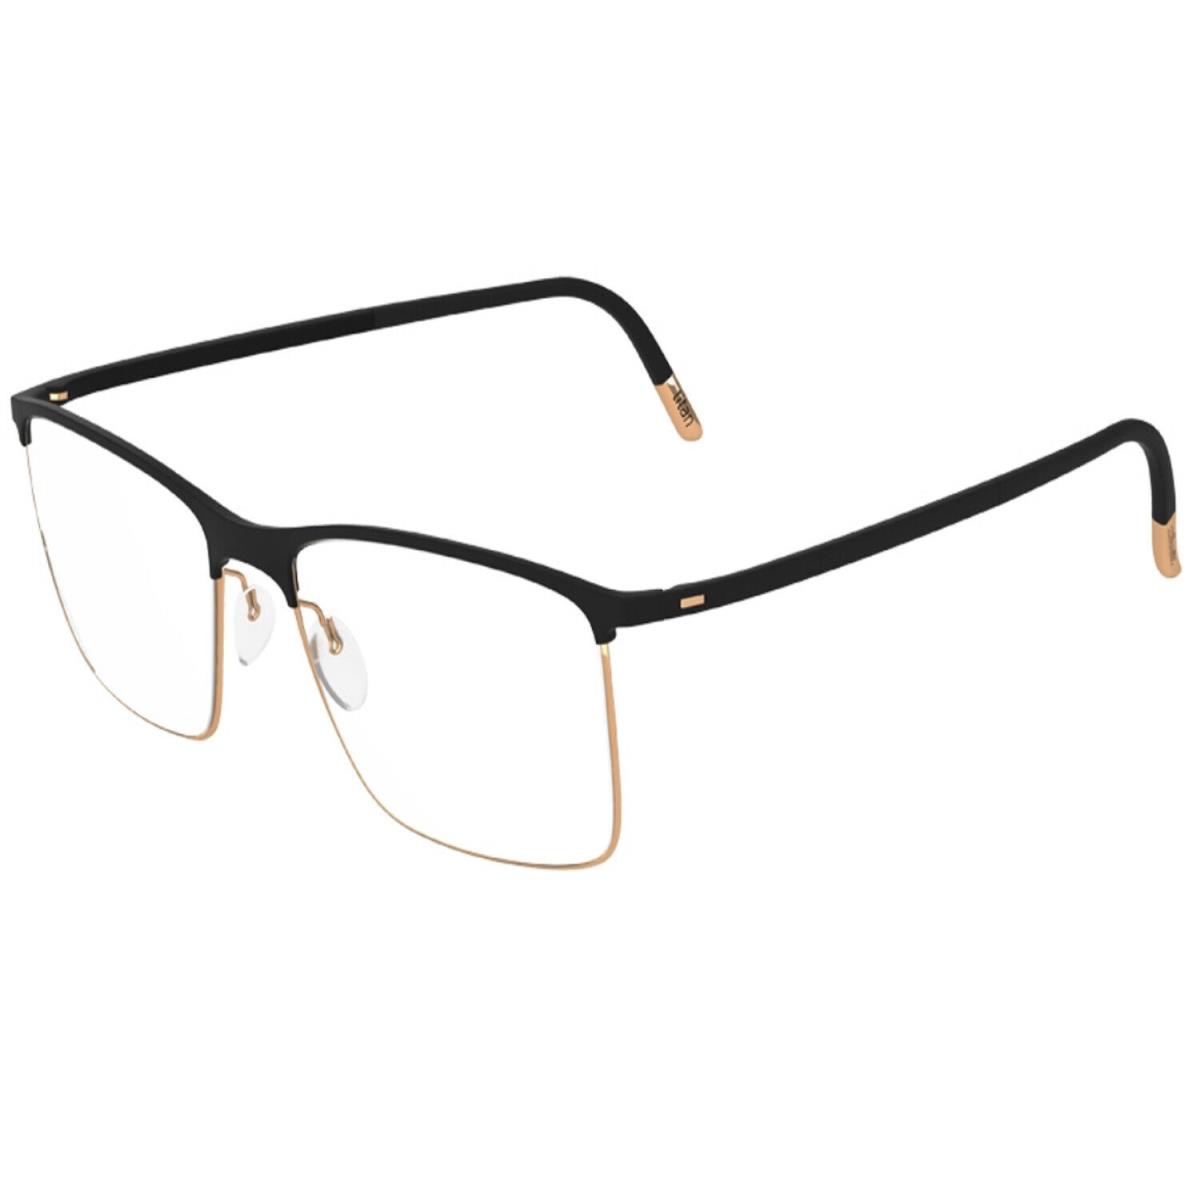 Silhouette Eyeglasses Urban Fusion 54-18-145 Black Gold 2903-6050-54mm